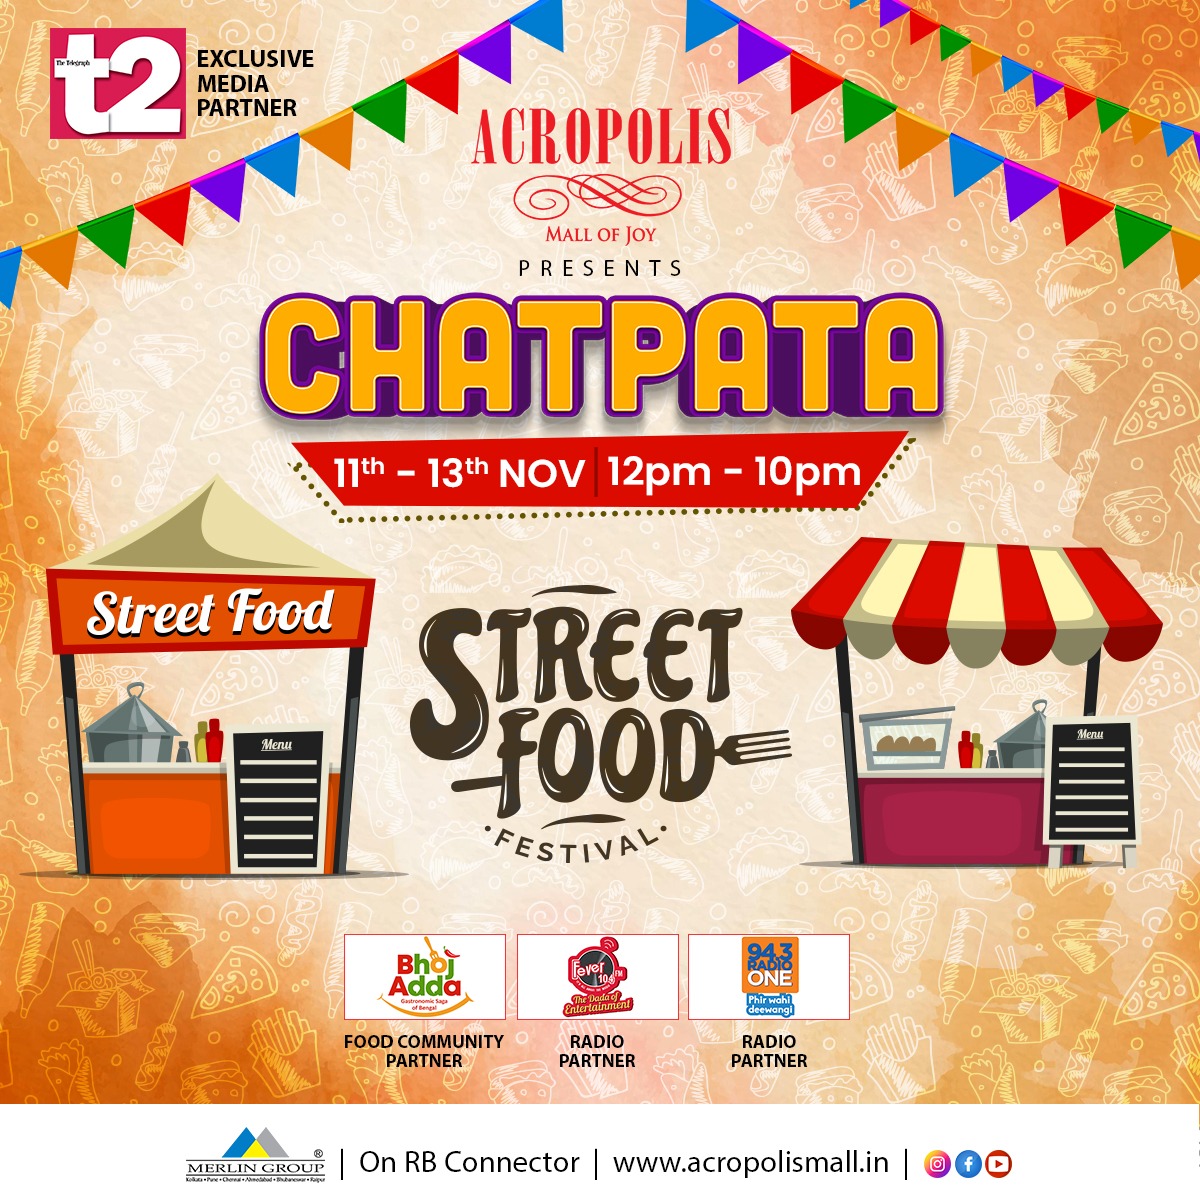 Chatpata-Street Food Festival 2022